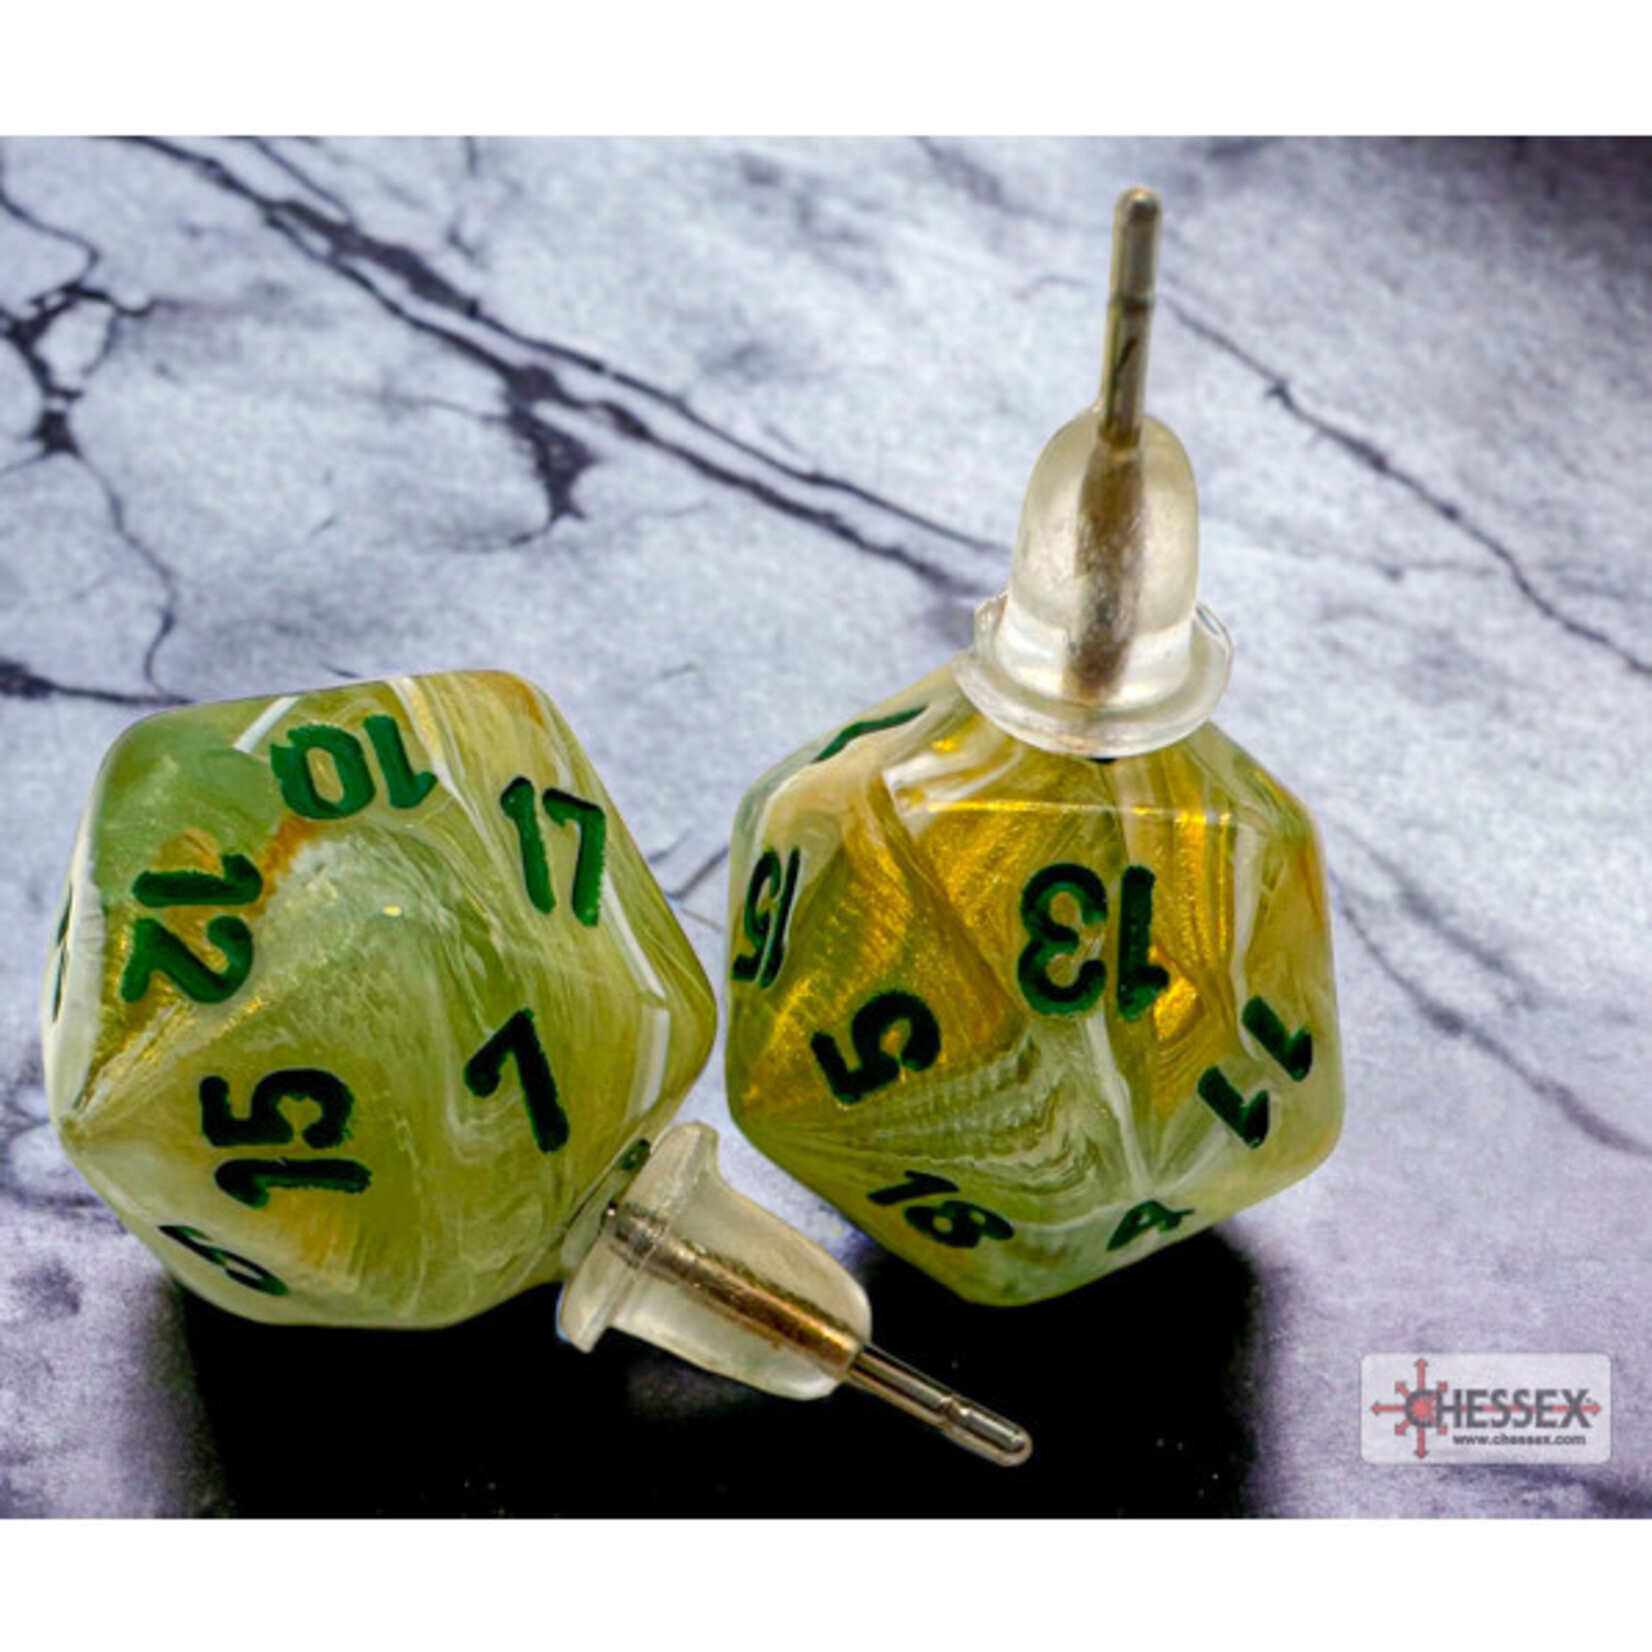 Chessex Mini D20 Stud Earrings: Marble Green